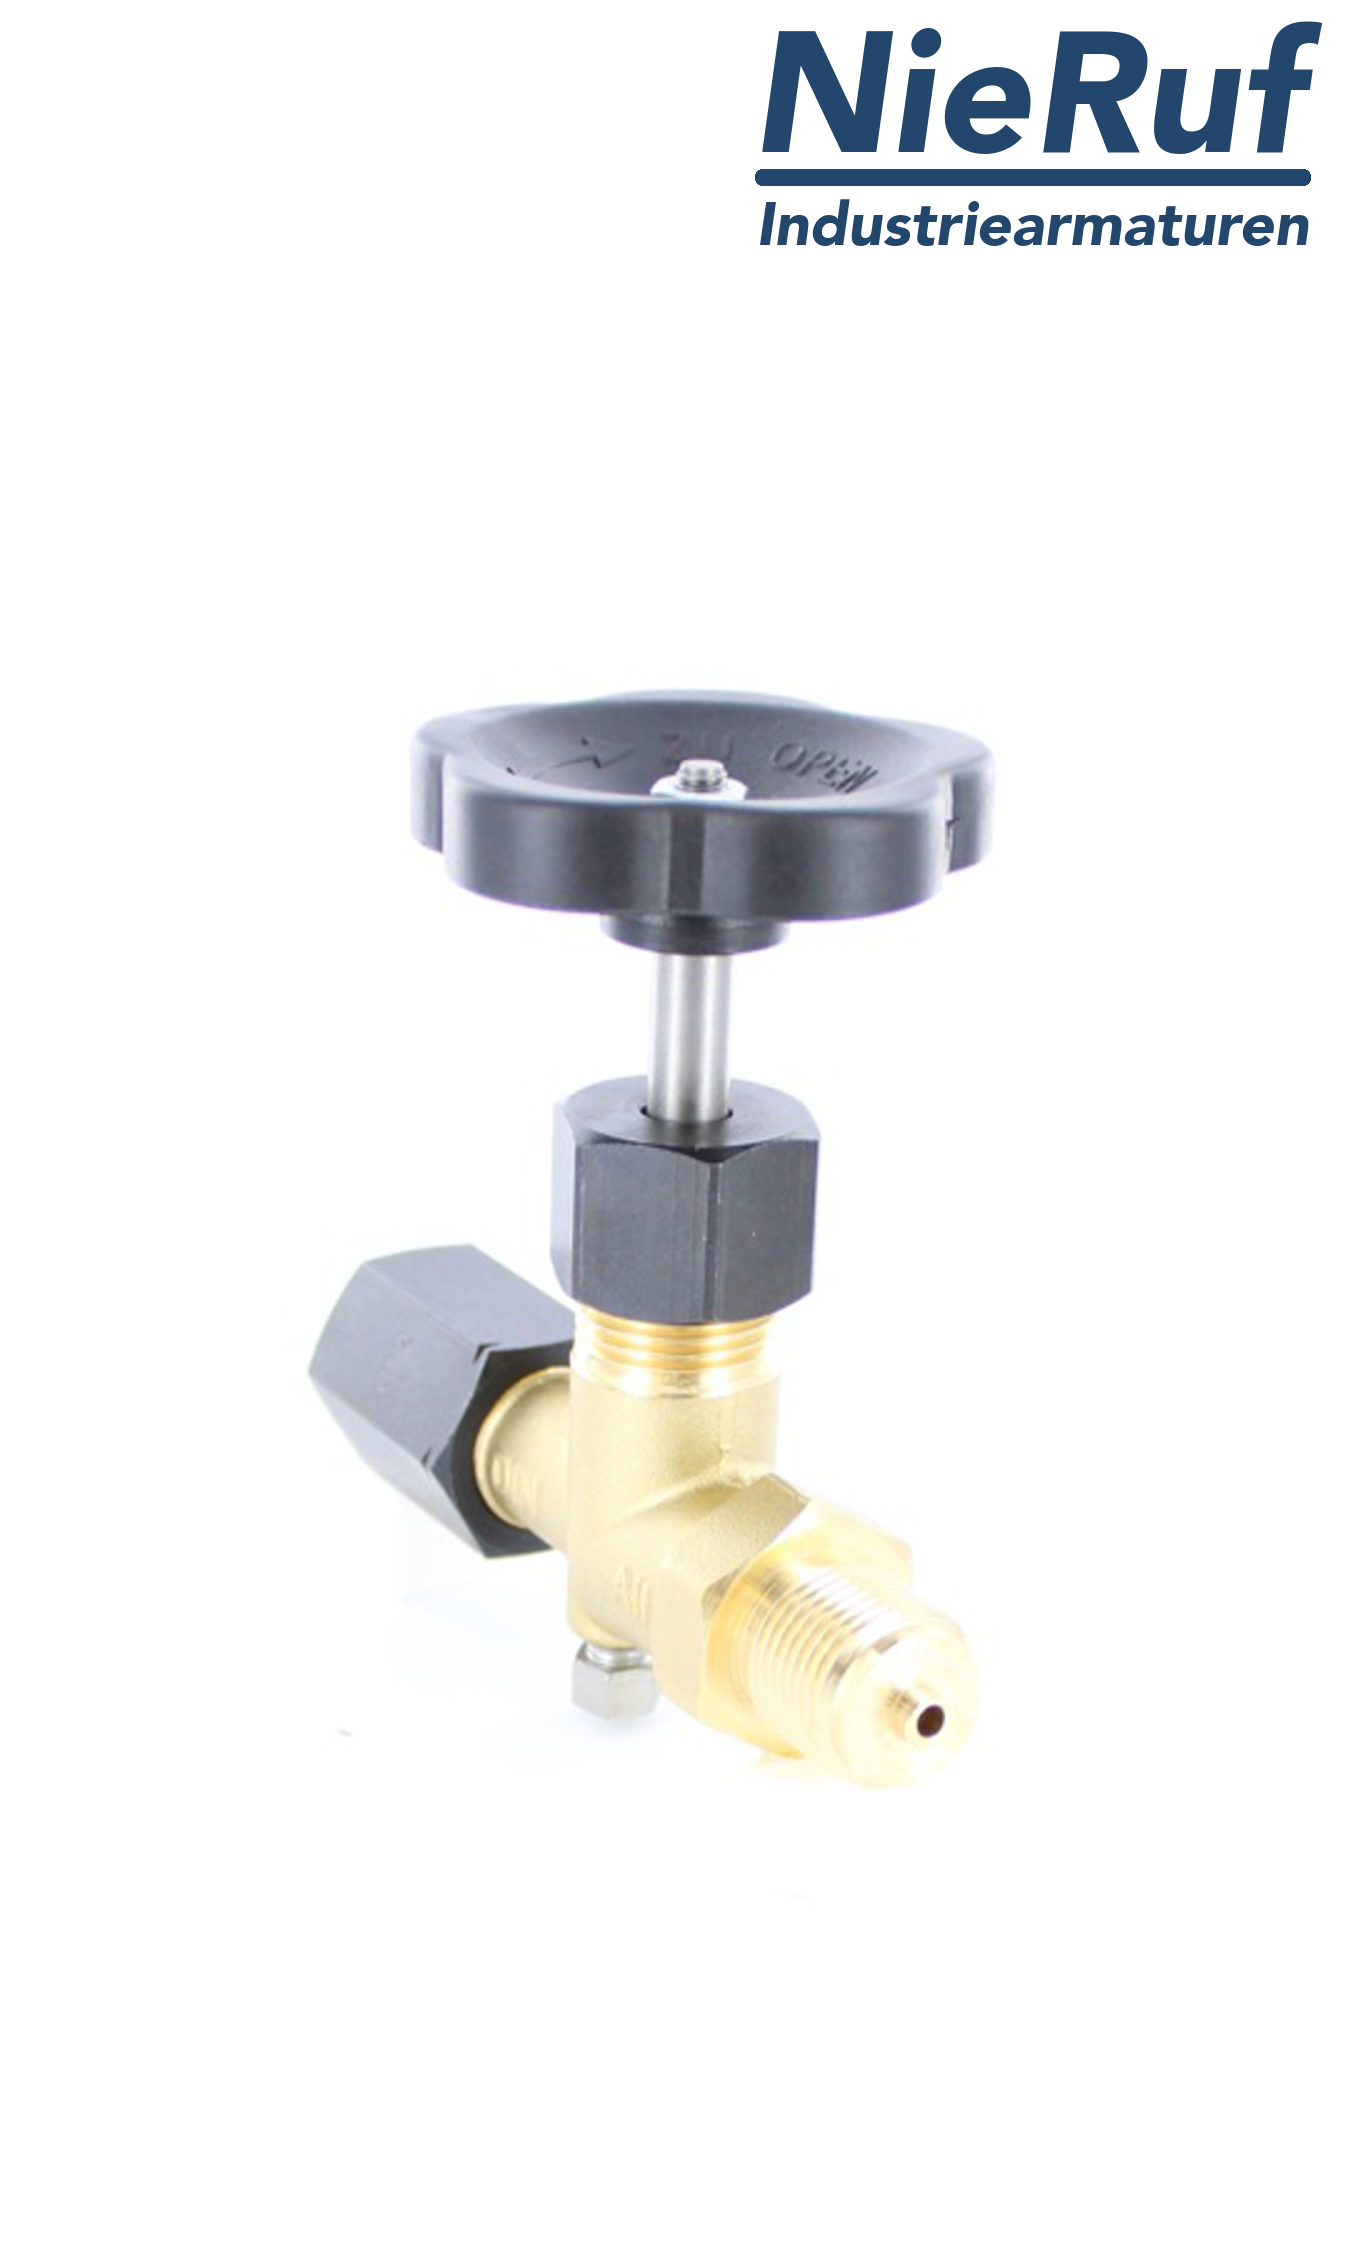 manometer gauge valves sleeve x sleeve DIN 16270 brass 250 bar